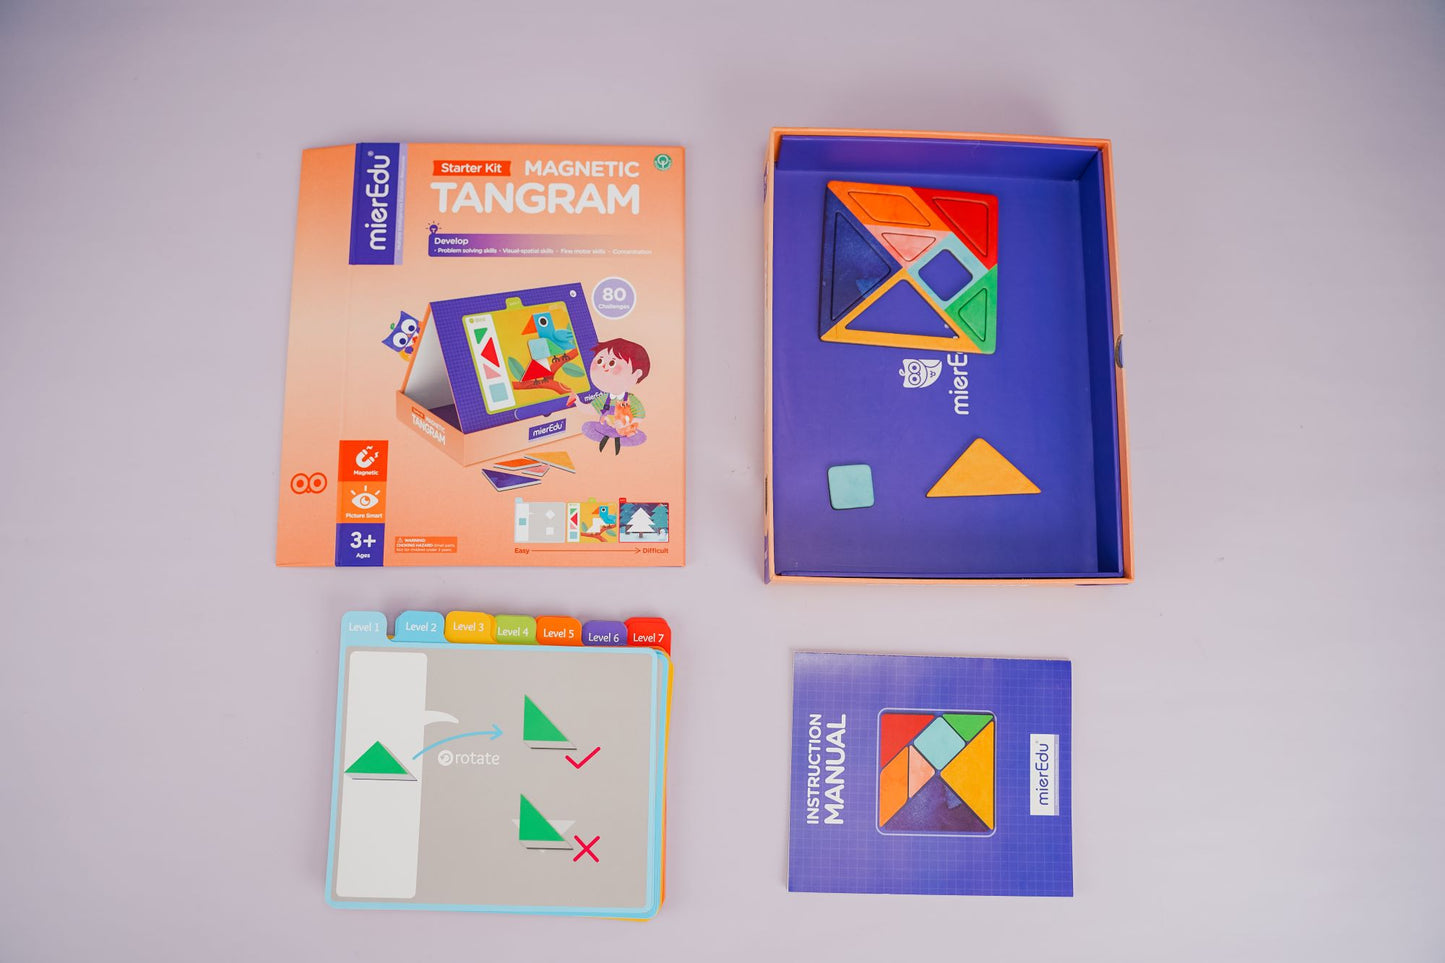 mierEdu Magnetische Reise Tangram Puzzles Buch-Starter Kit Single Version